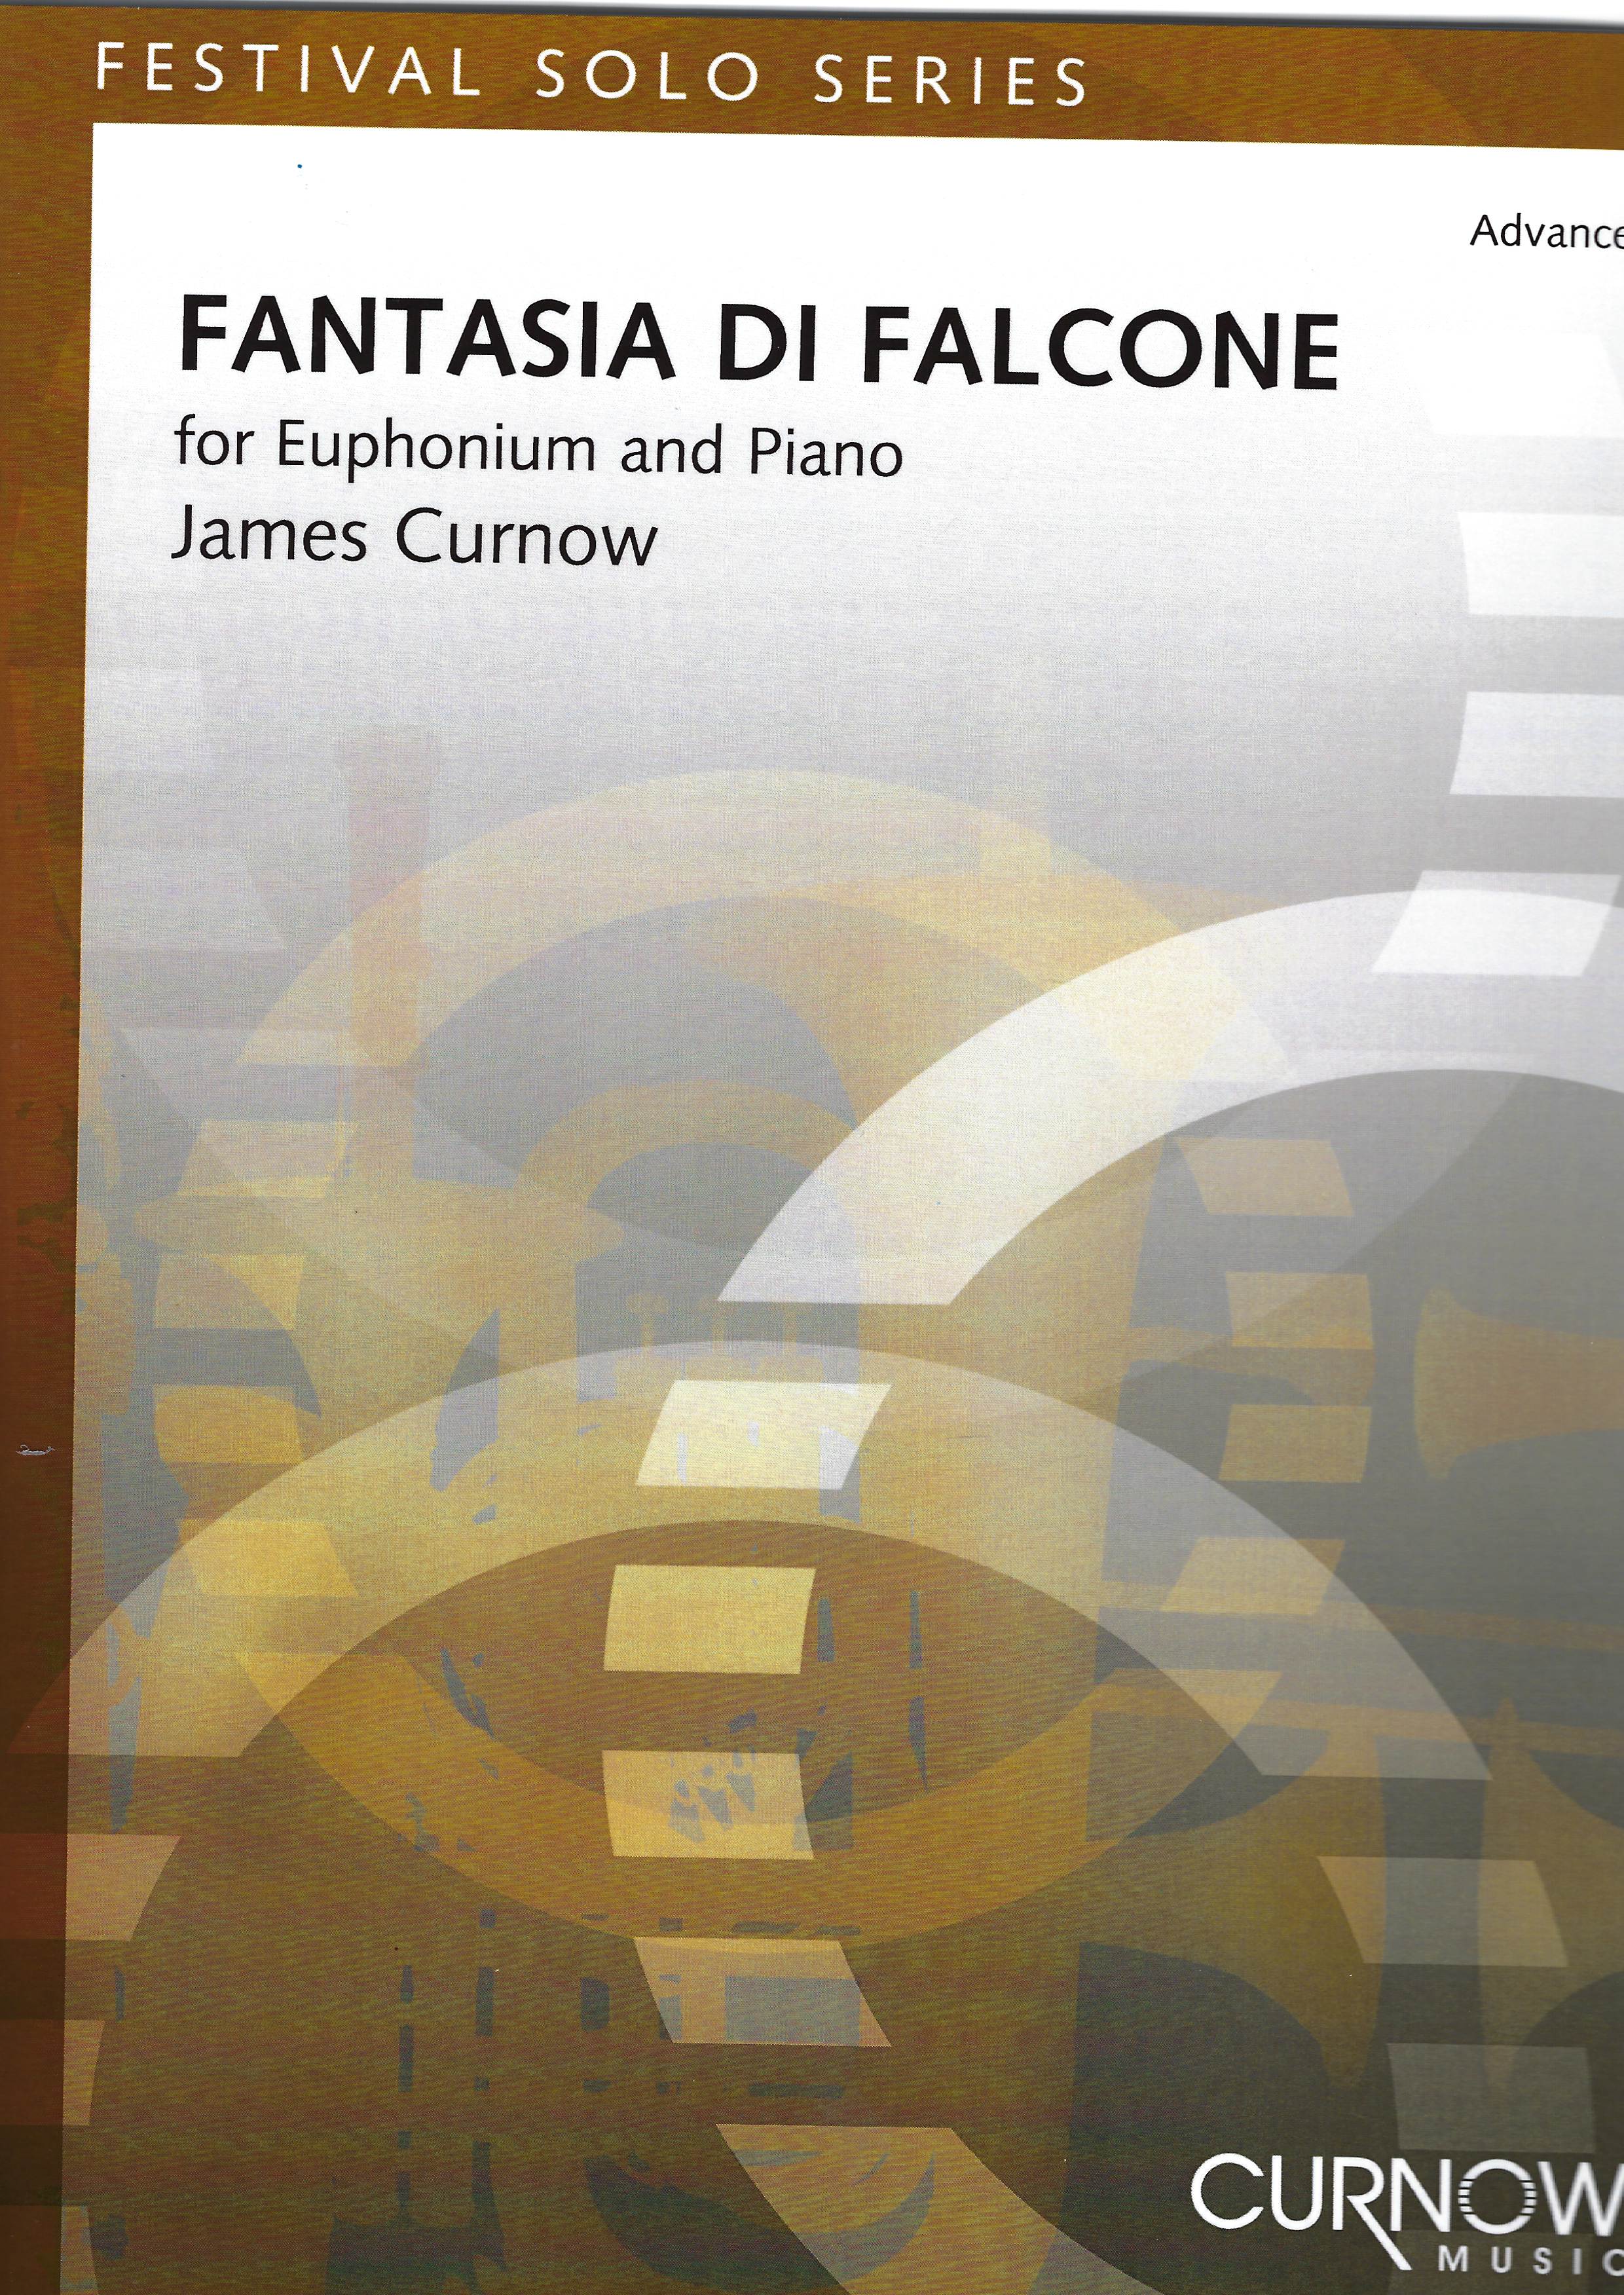 Fantasia di Falcone - James Curnow - Euphonium and Piano